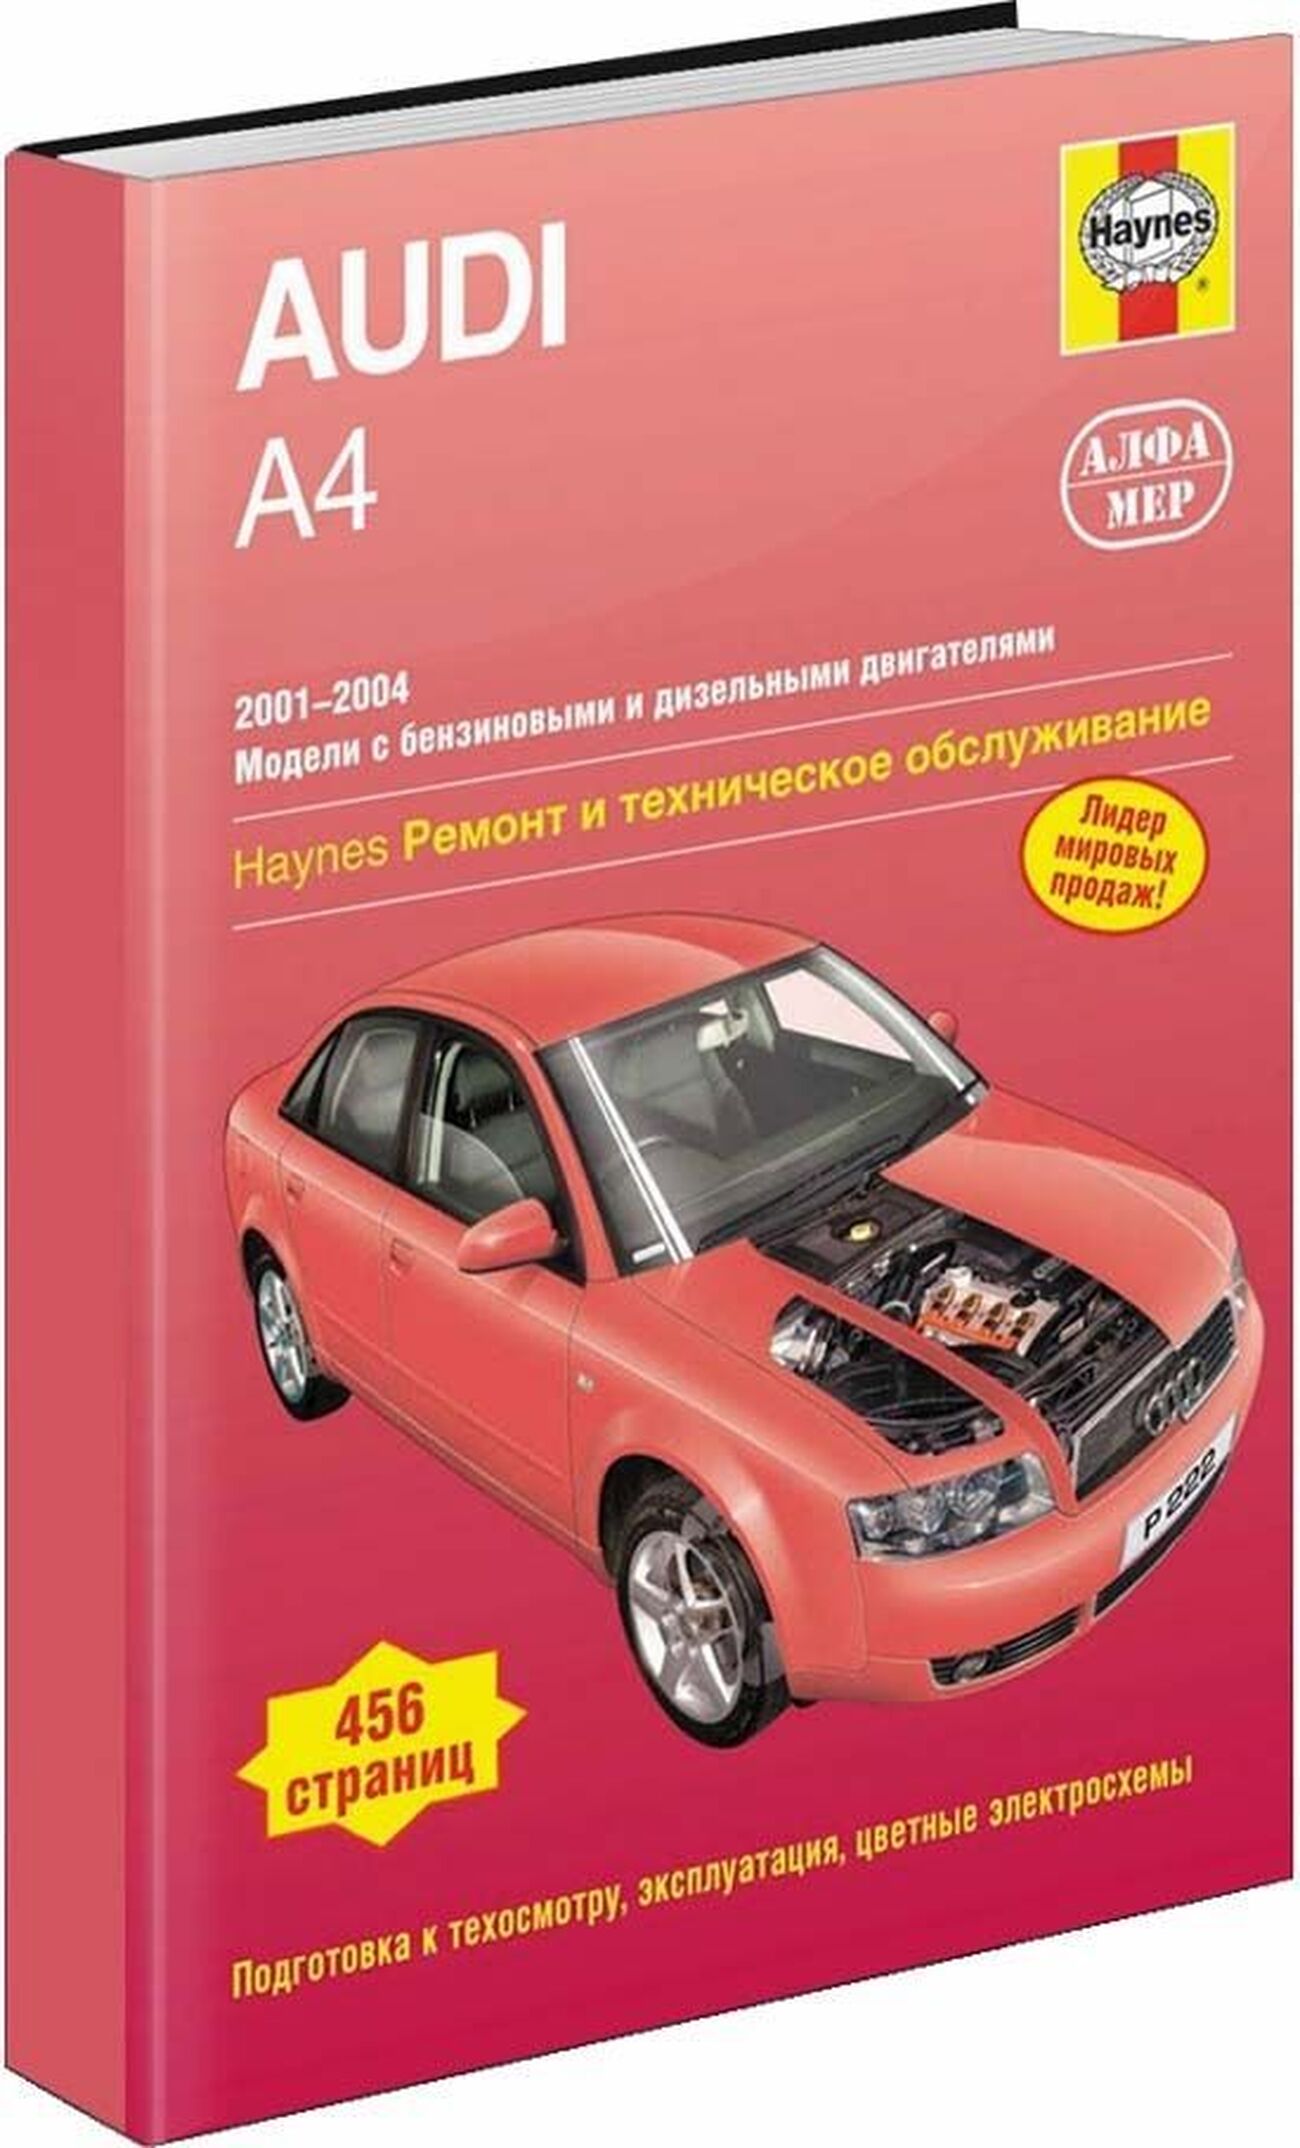 Книга: AUDI A4 (б , д) 2001-2004 г.в.,рем., экспл., то | Алфамер Паблишинг